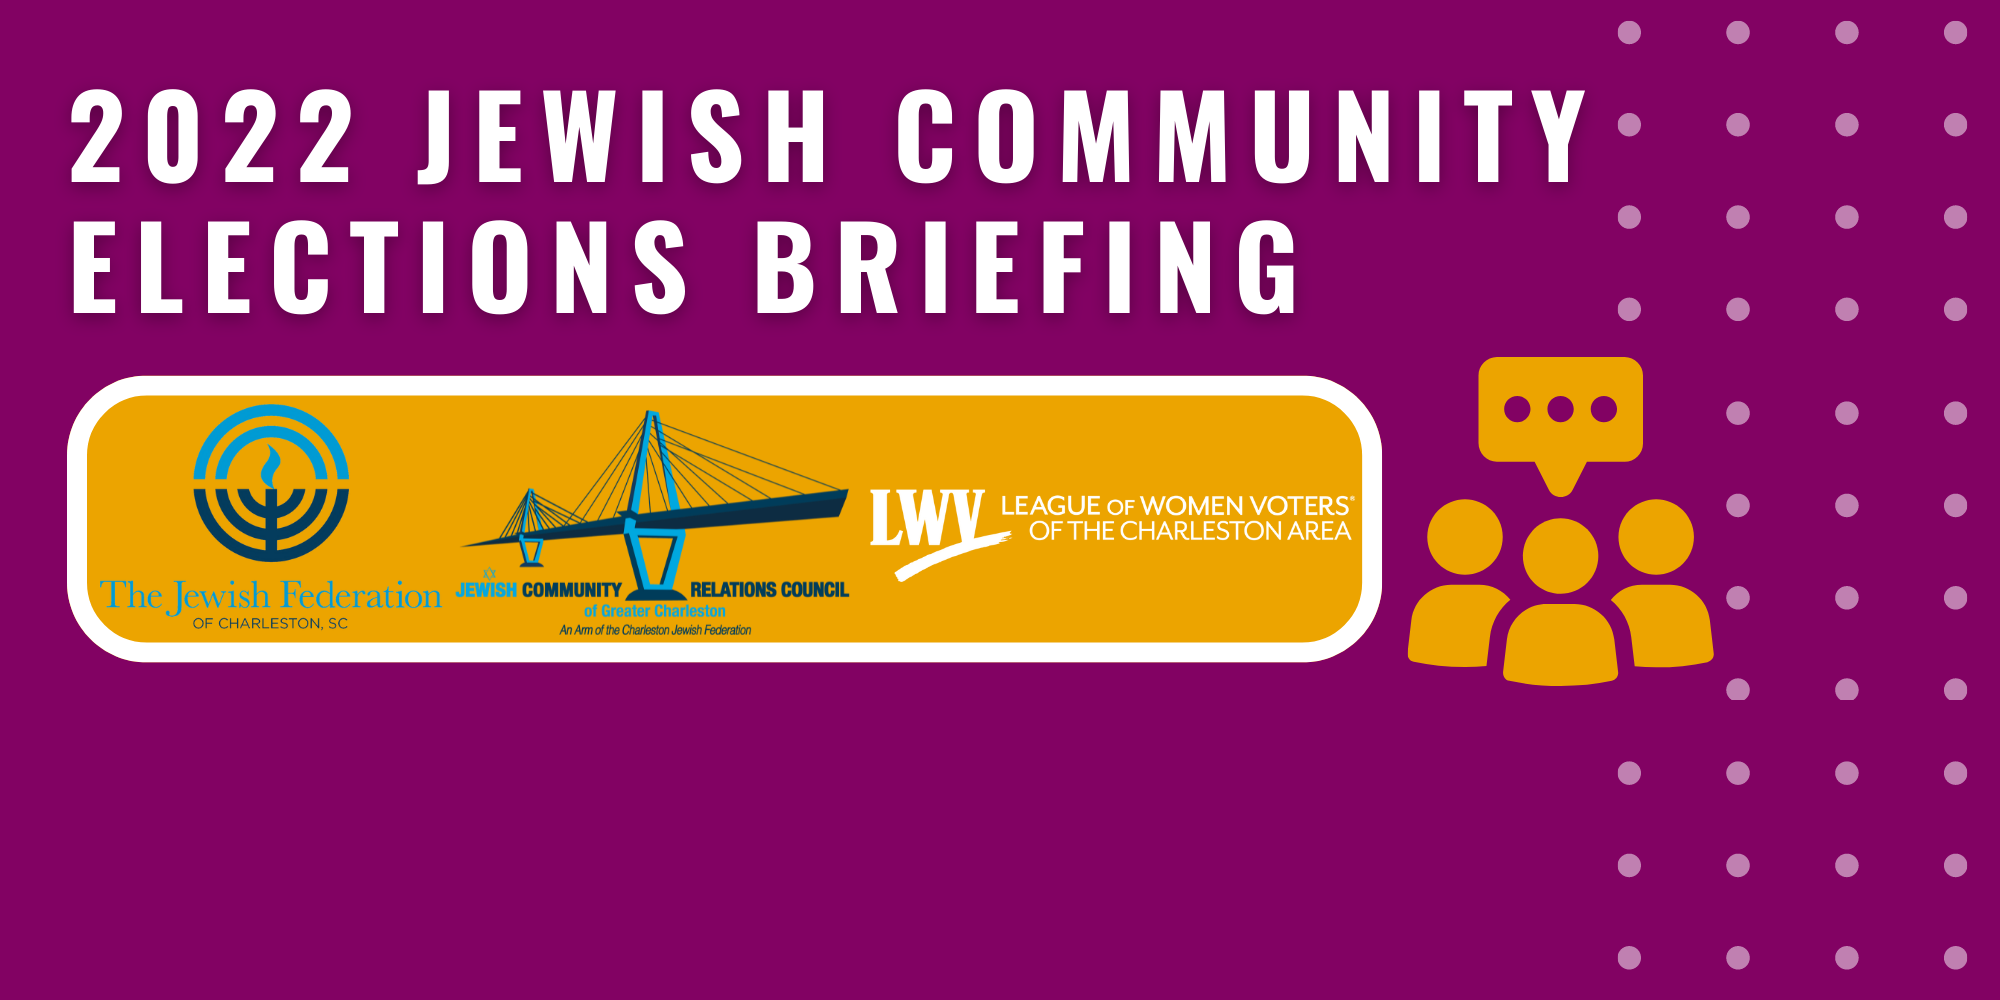 2022 Jewish Community Elections Briefing Charleston SC